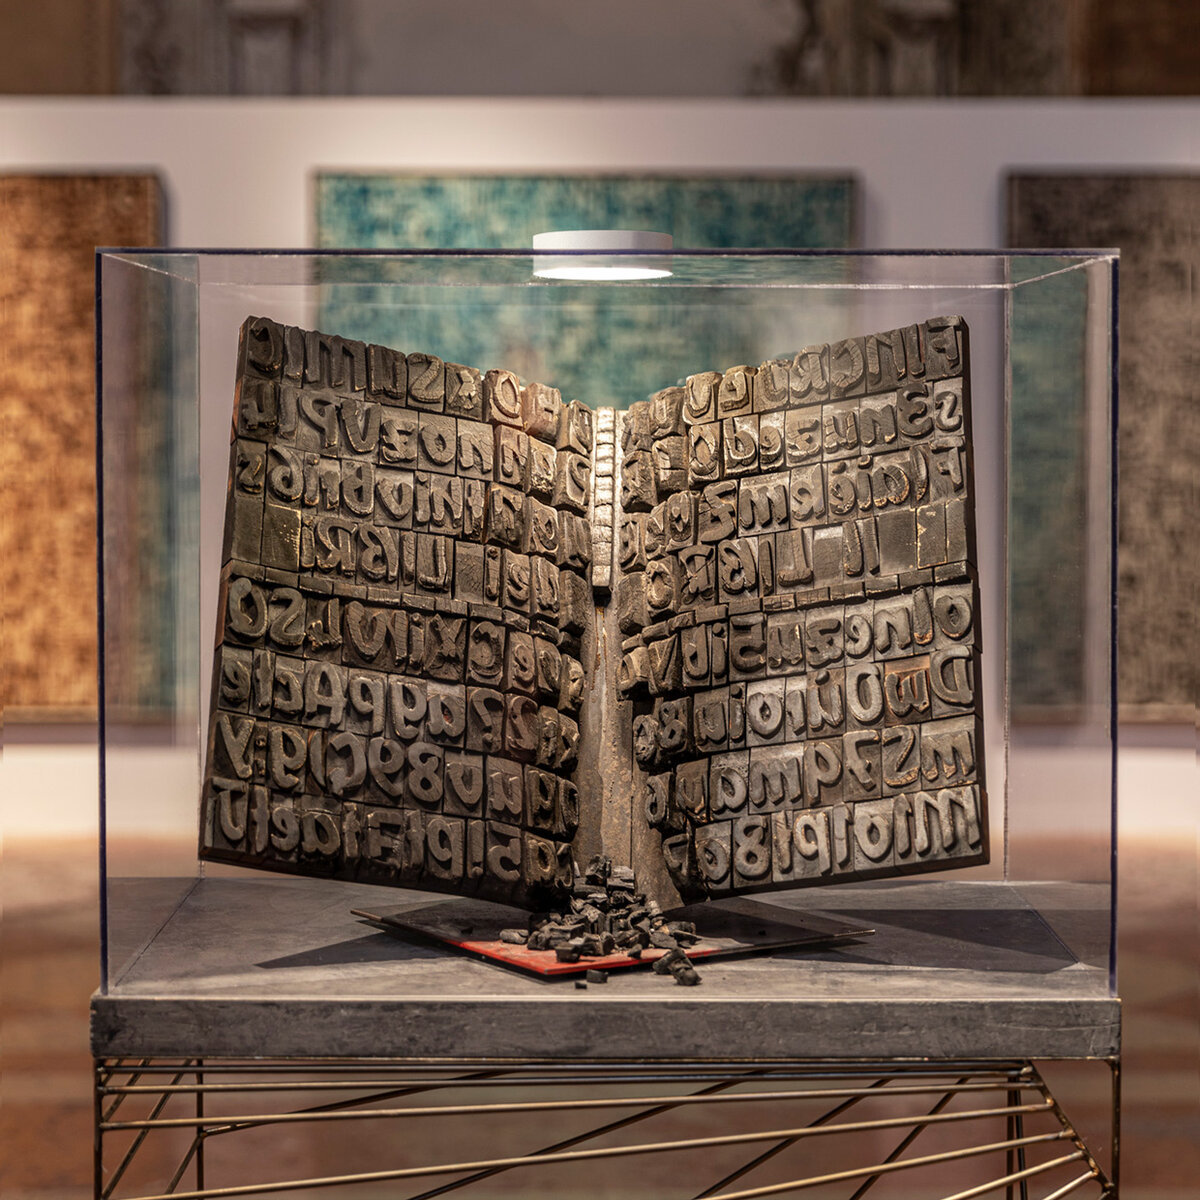 Exposition « La Scrittura come Enigma » | © Davide Groppi srl | All Rights Reserved